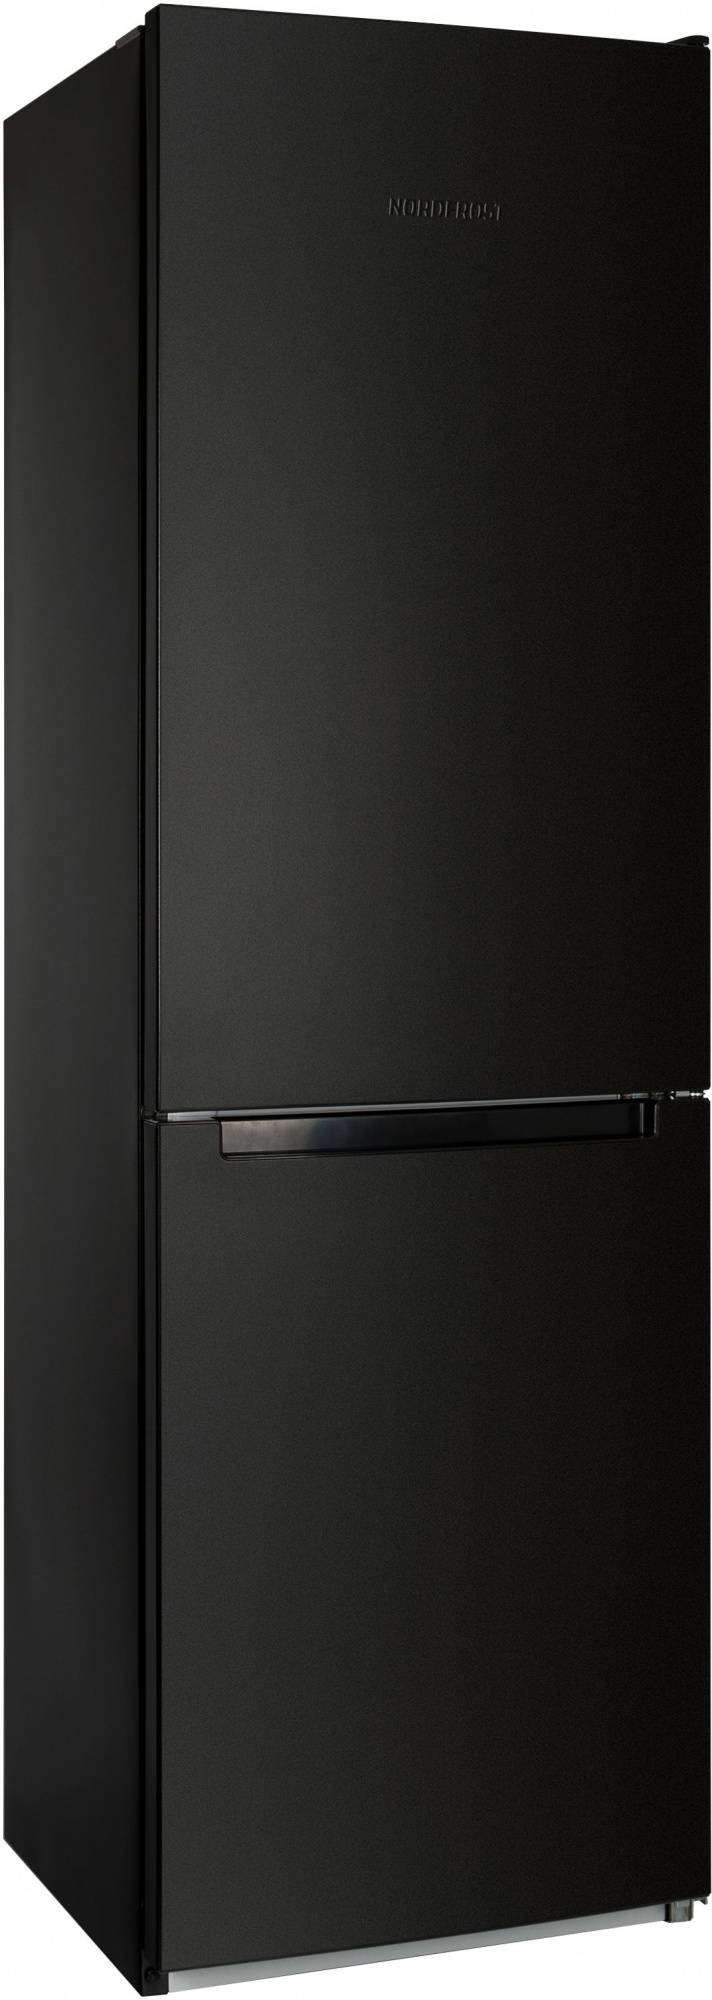 Холодильник двухкамерный Nordfrost NRB 152 B